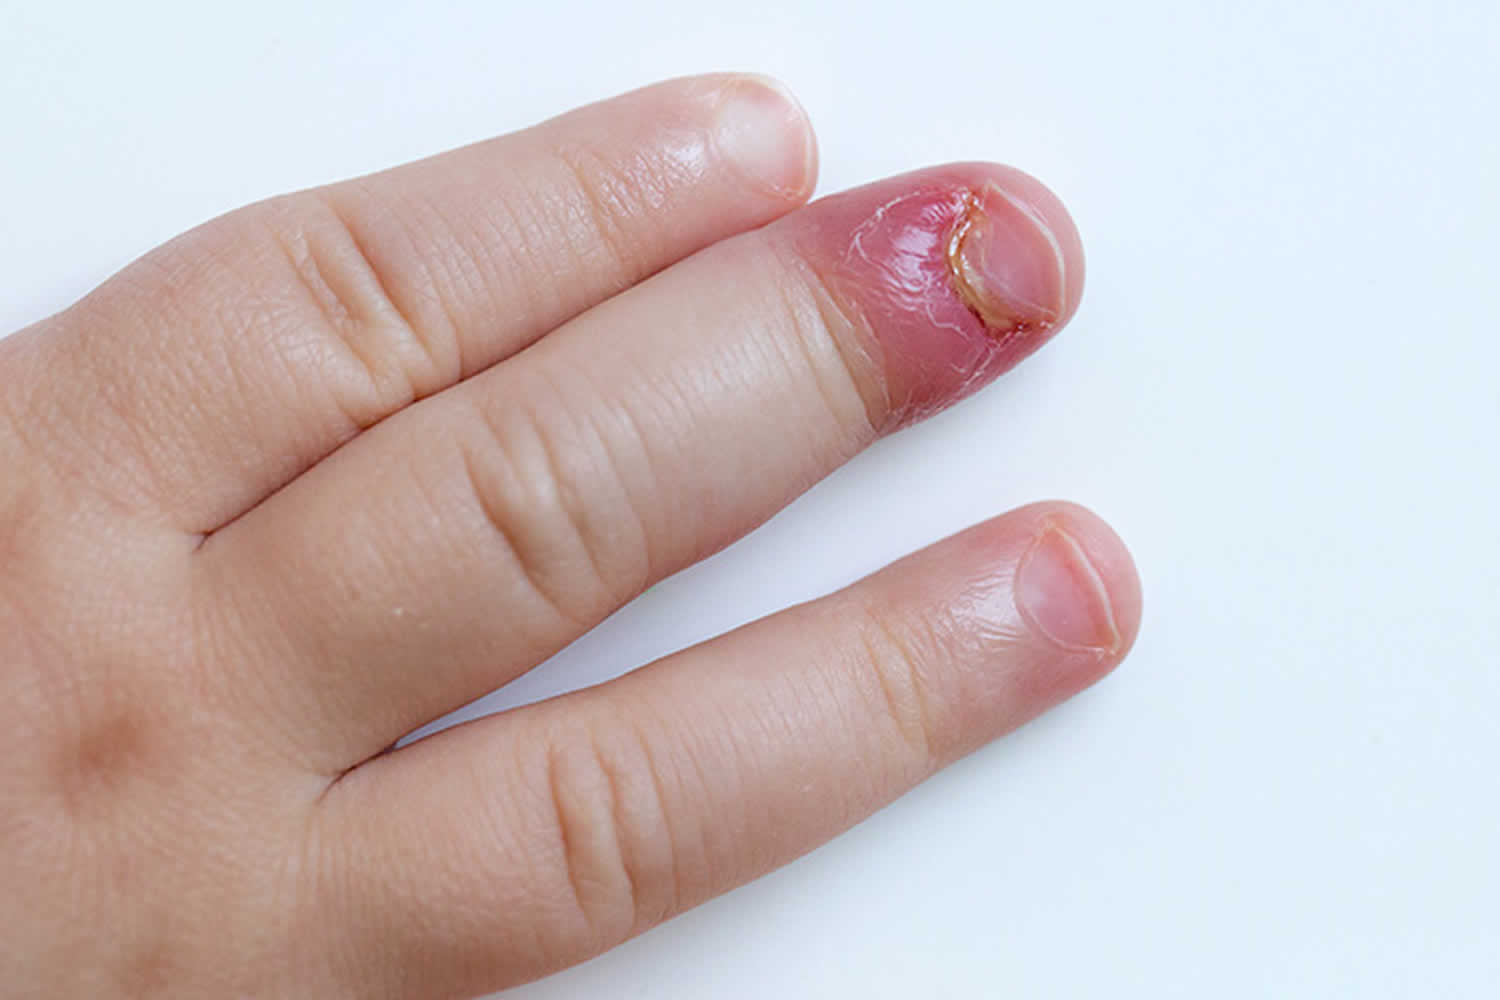 Nail Problem Nail Fold Infection Paronychia Stock Photo 771579253 |  Shutterstock